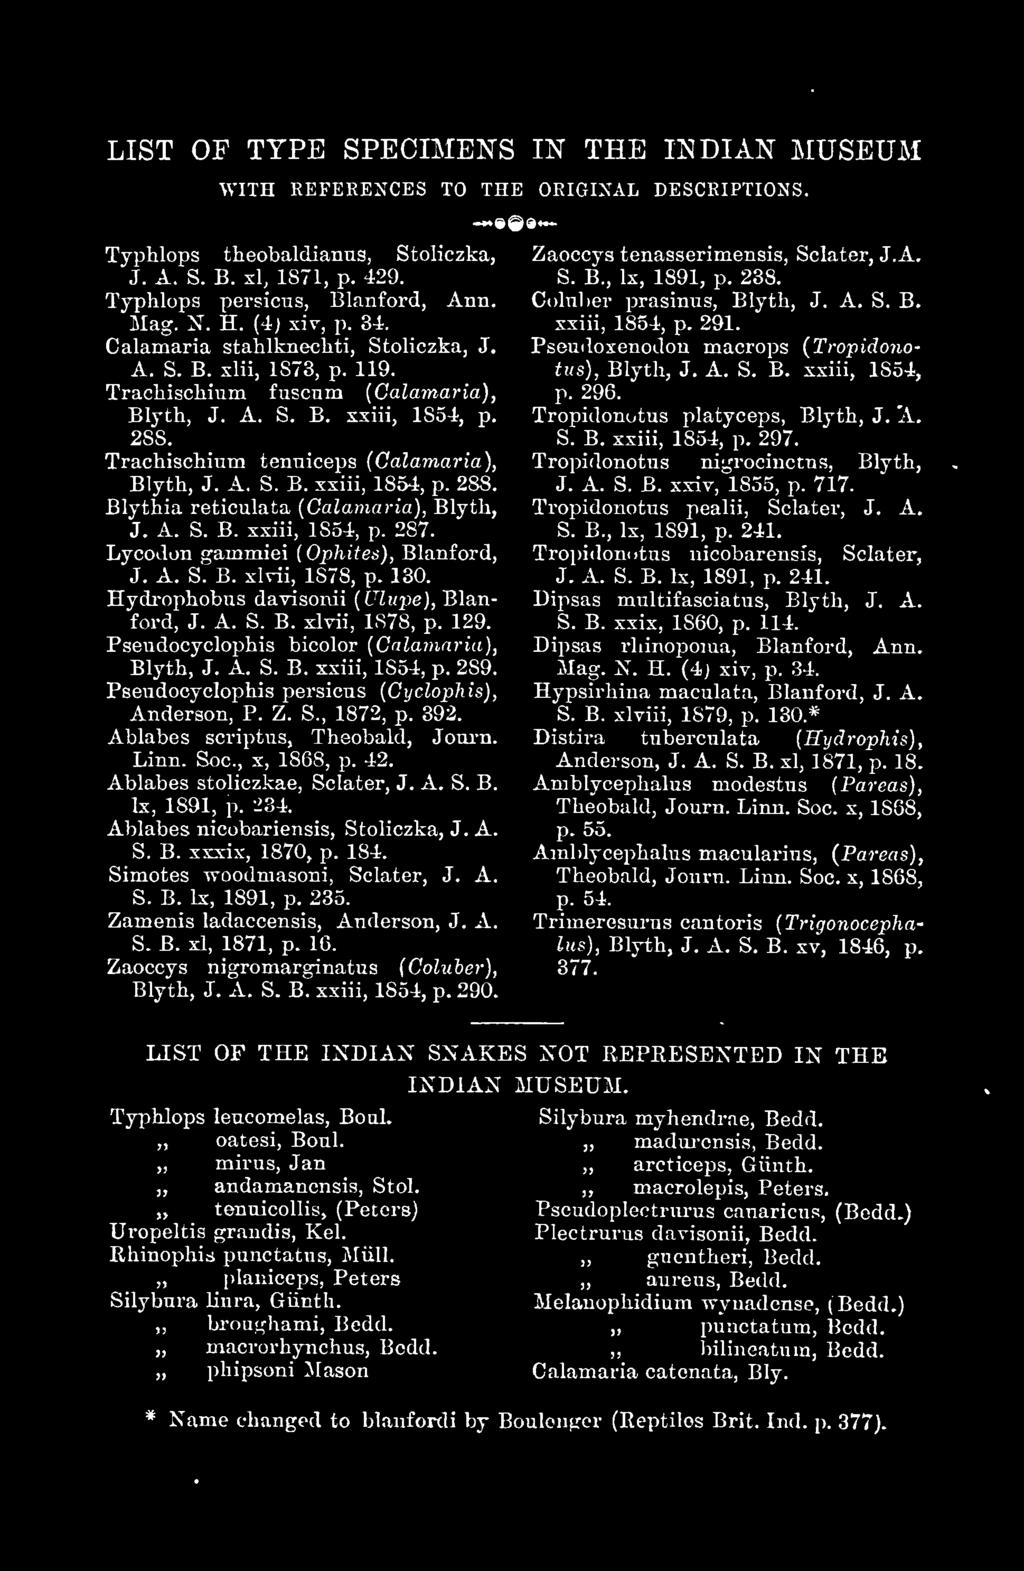 Soc, x, 1868, p. 42. Ablabes stoliczkae, Sclater, J. A. S. B. Ix, 1891, p. -234. Ablabes nicobariensis, Stoliczka, J. A. S. B. xxxix, 1870, p. 184. Simotes woodmasoni, Sclater, J. A. S. B. Ix, 1891, p. 235.